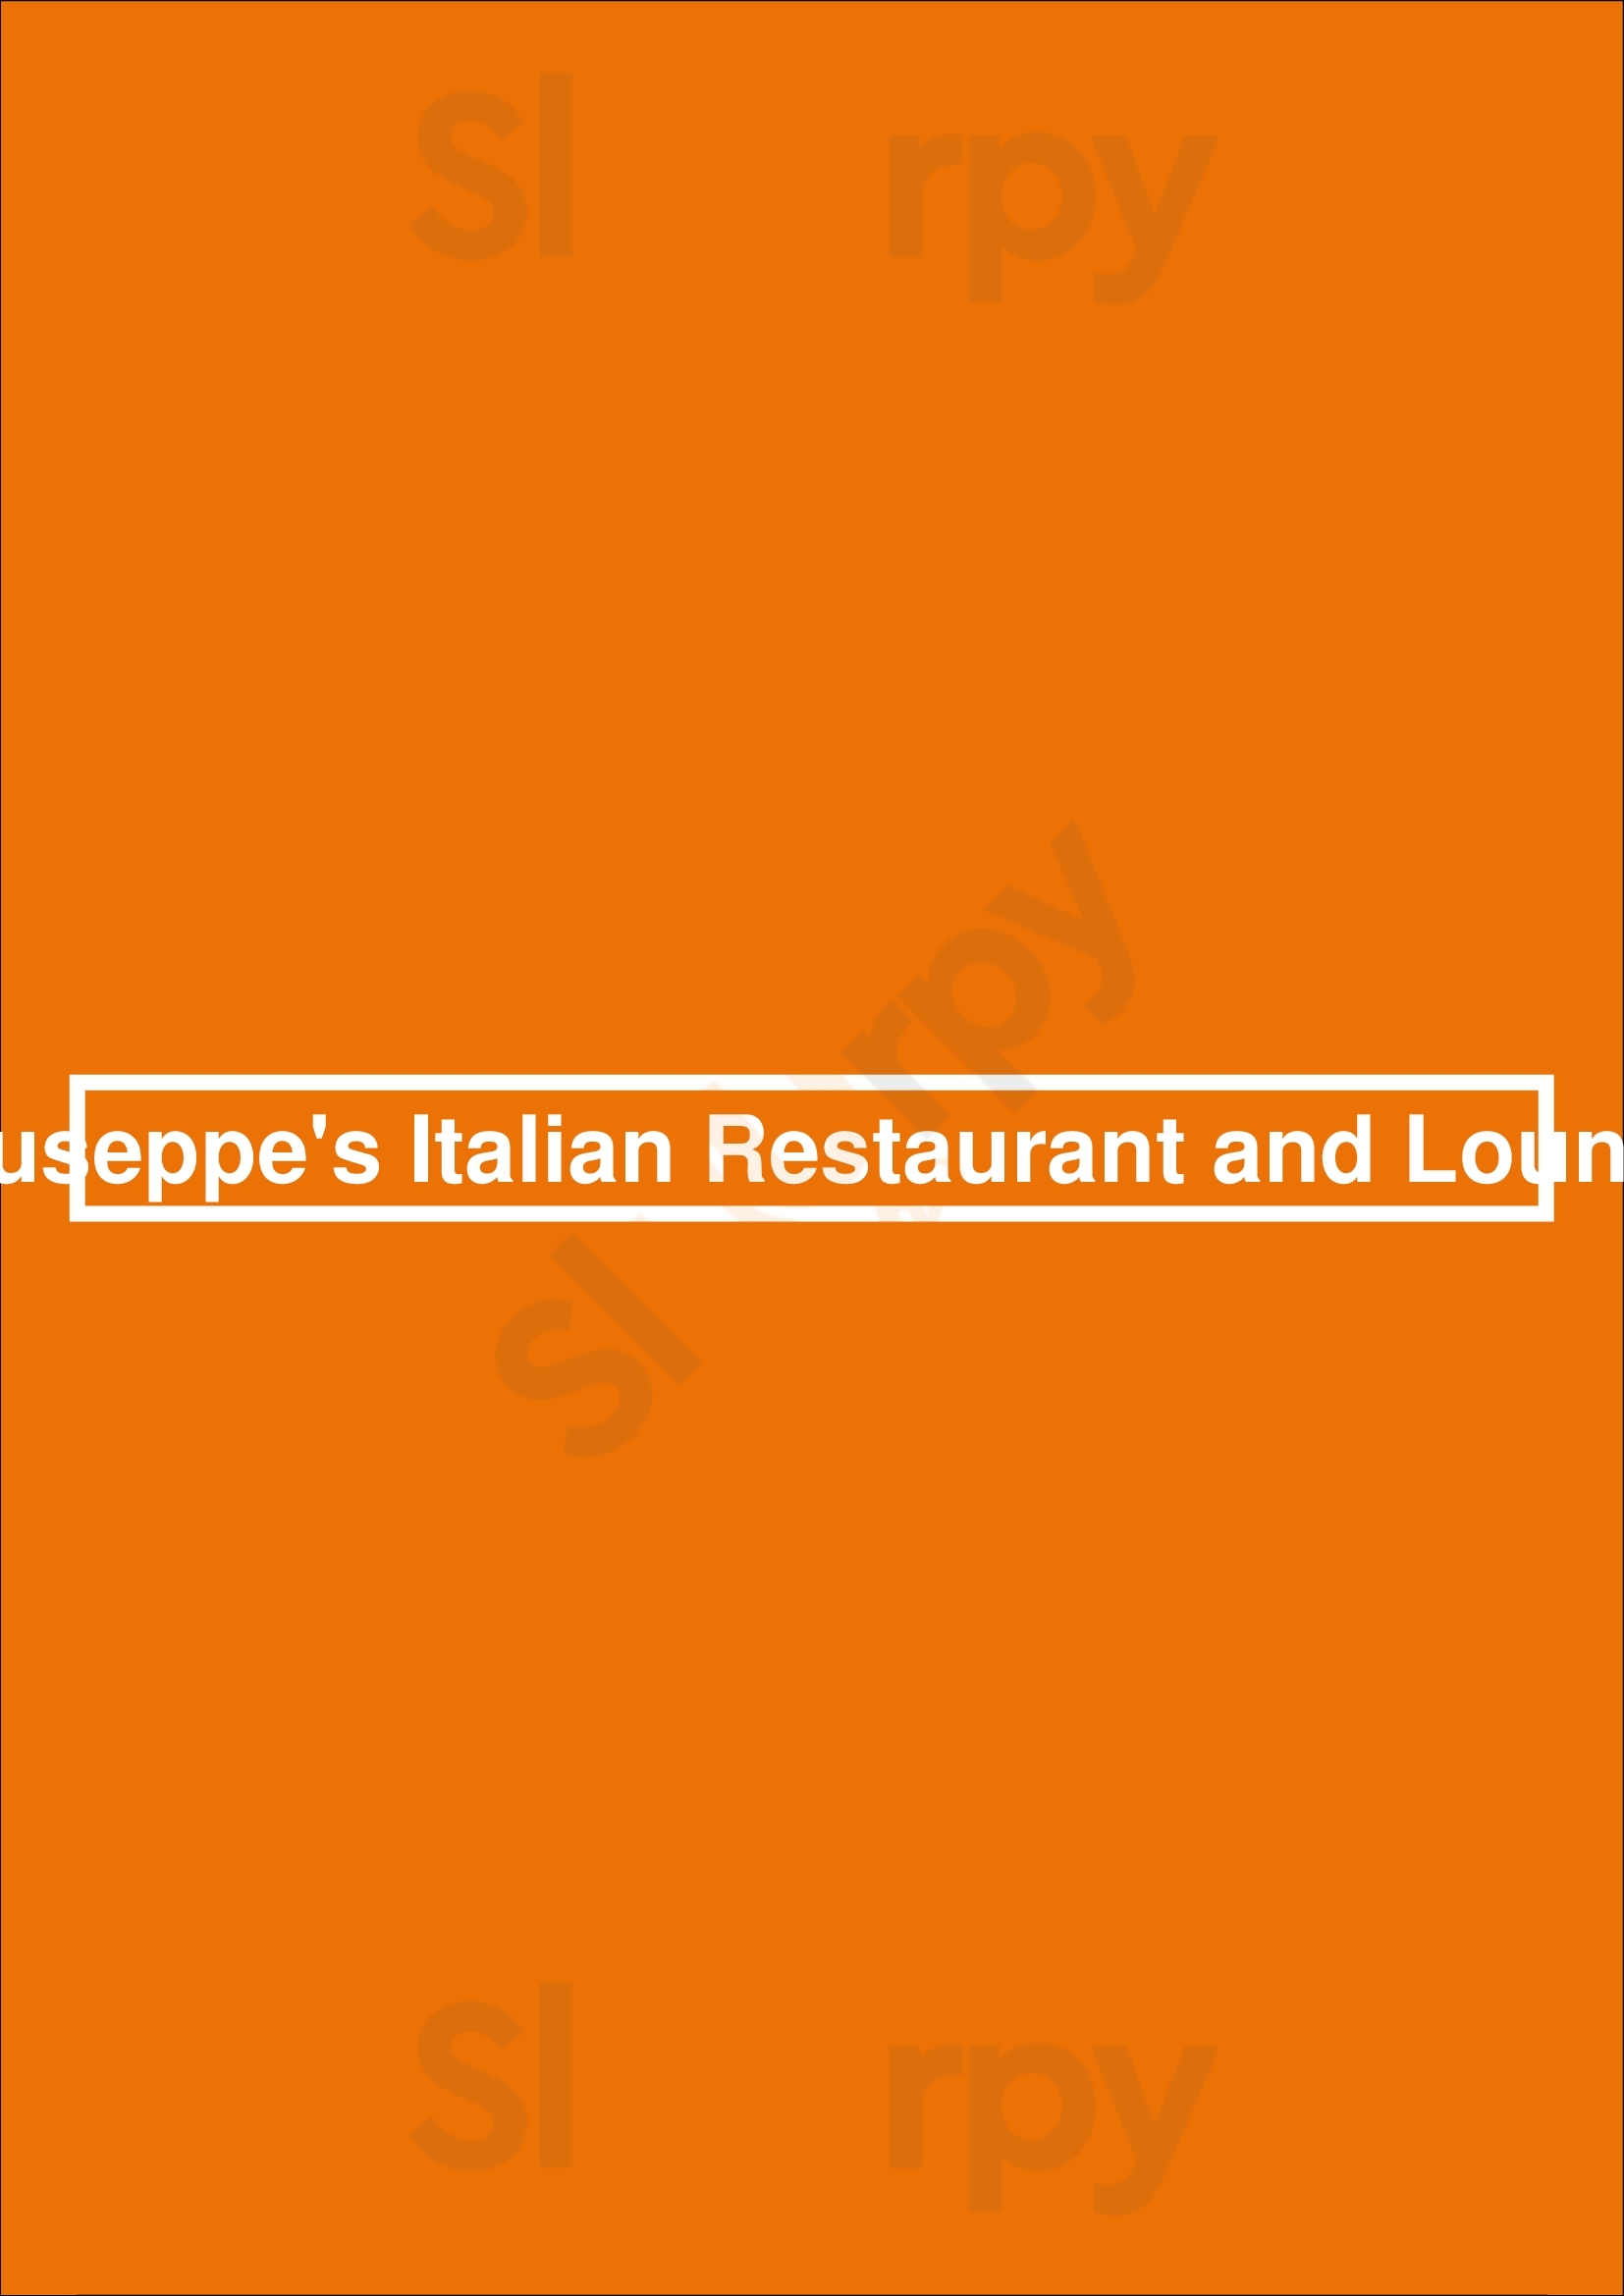 Giuseppe's Italian Restaurant And Lounge Portland Menu - 1